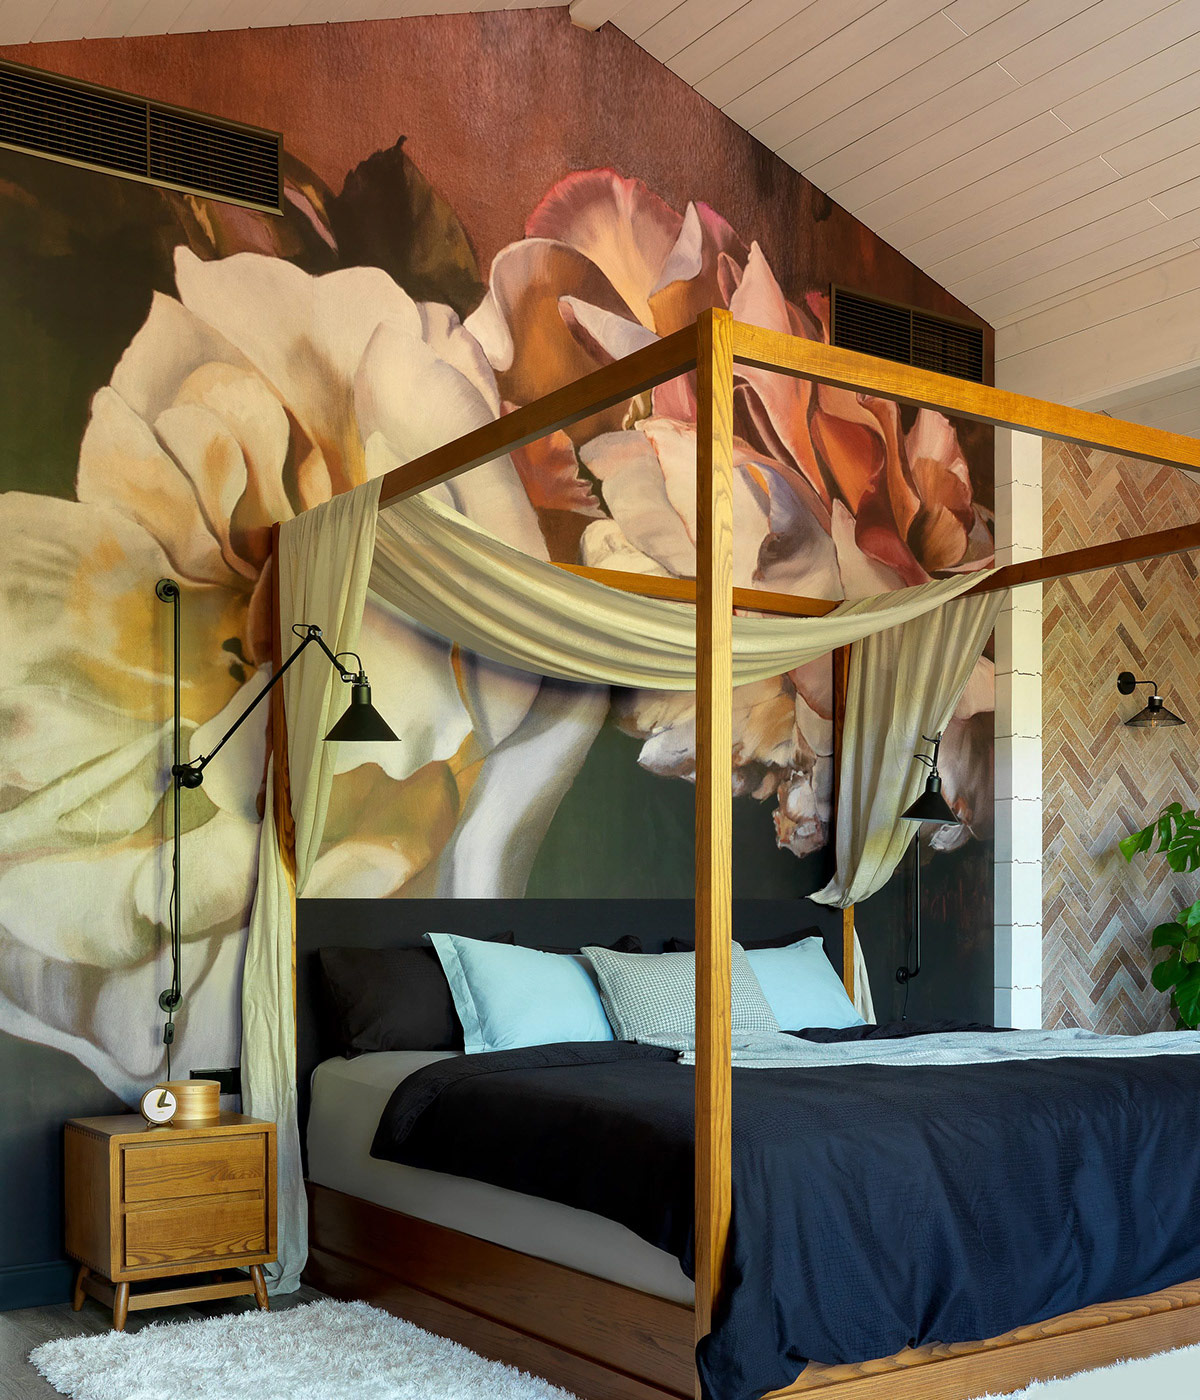 floral-bedroom-wall-600x700.jpg